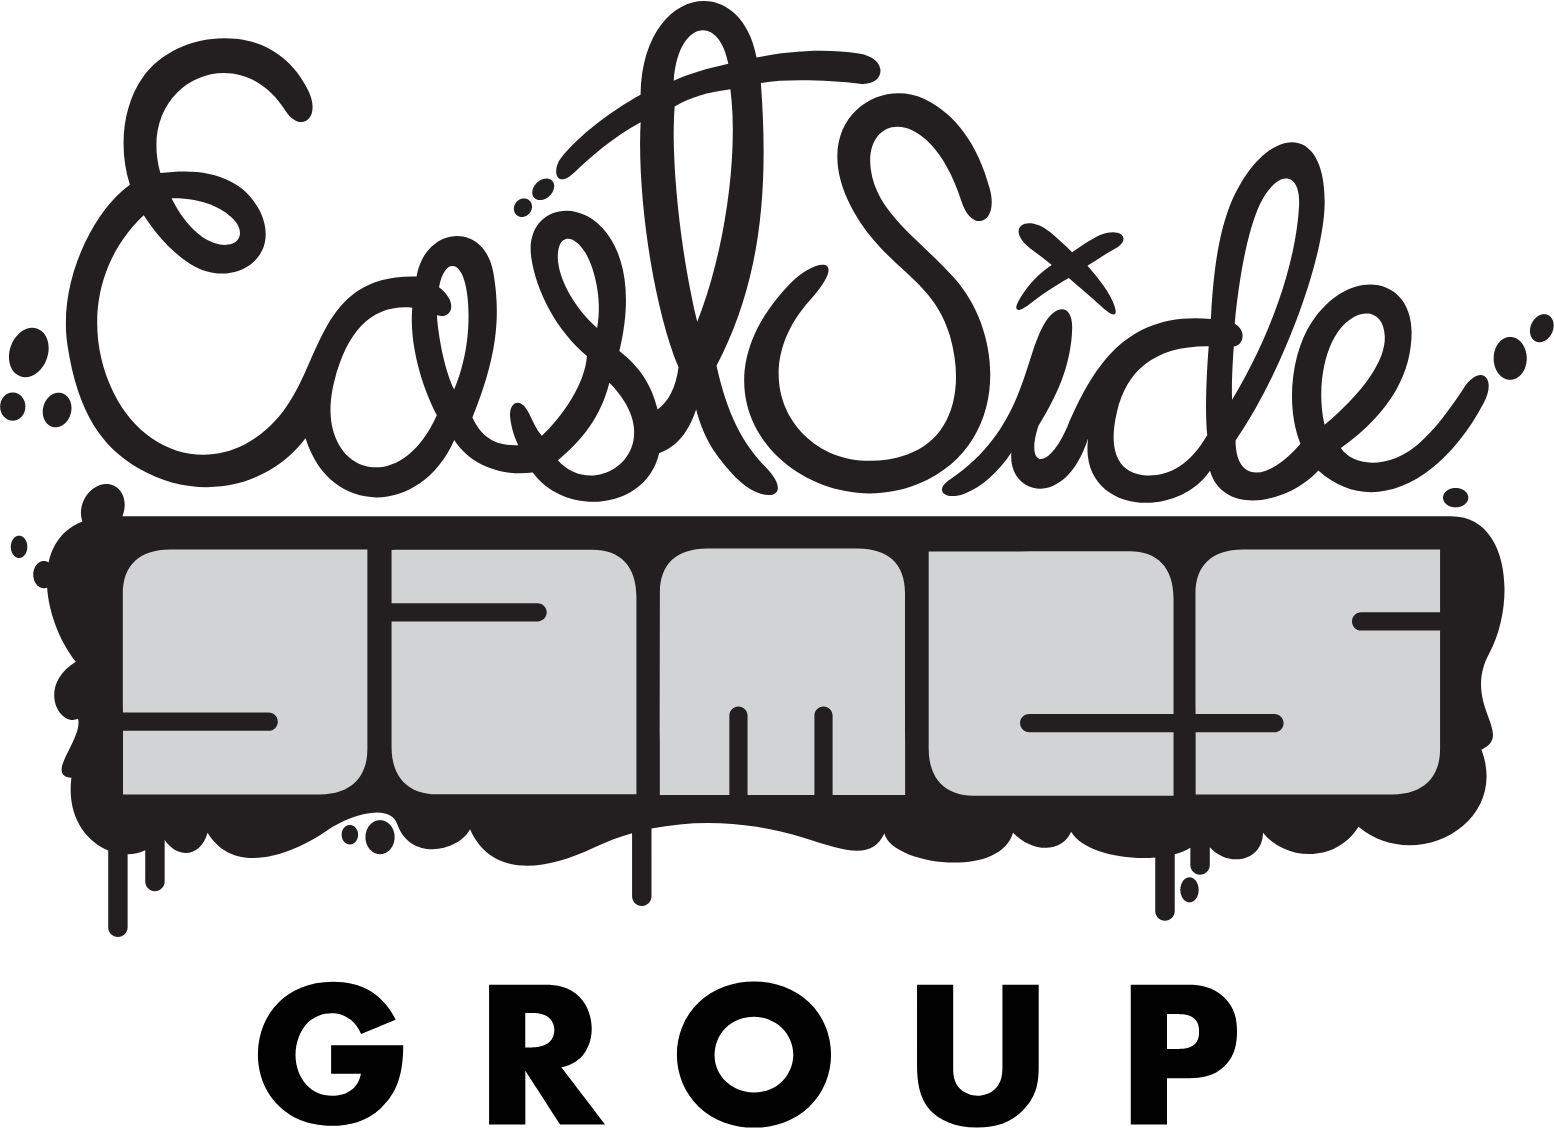 east side logo